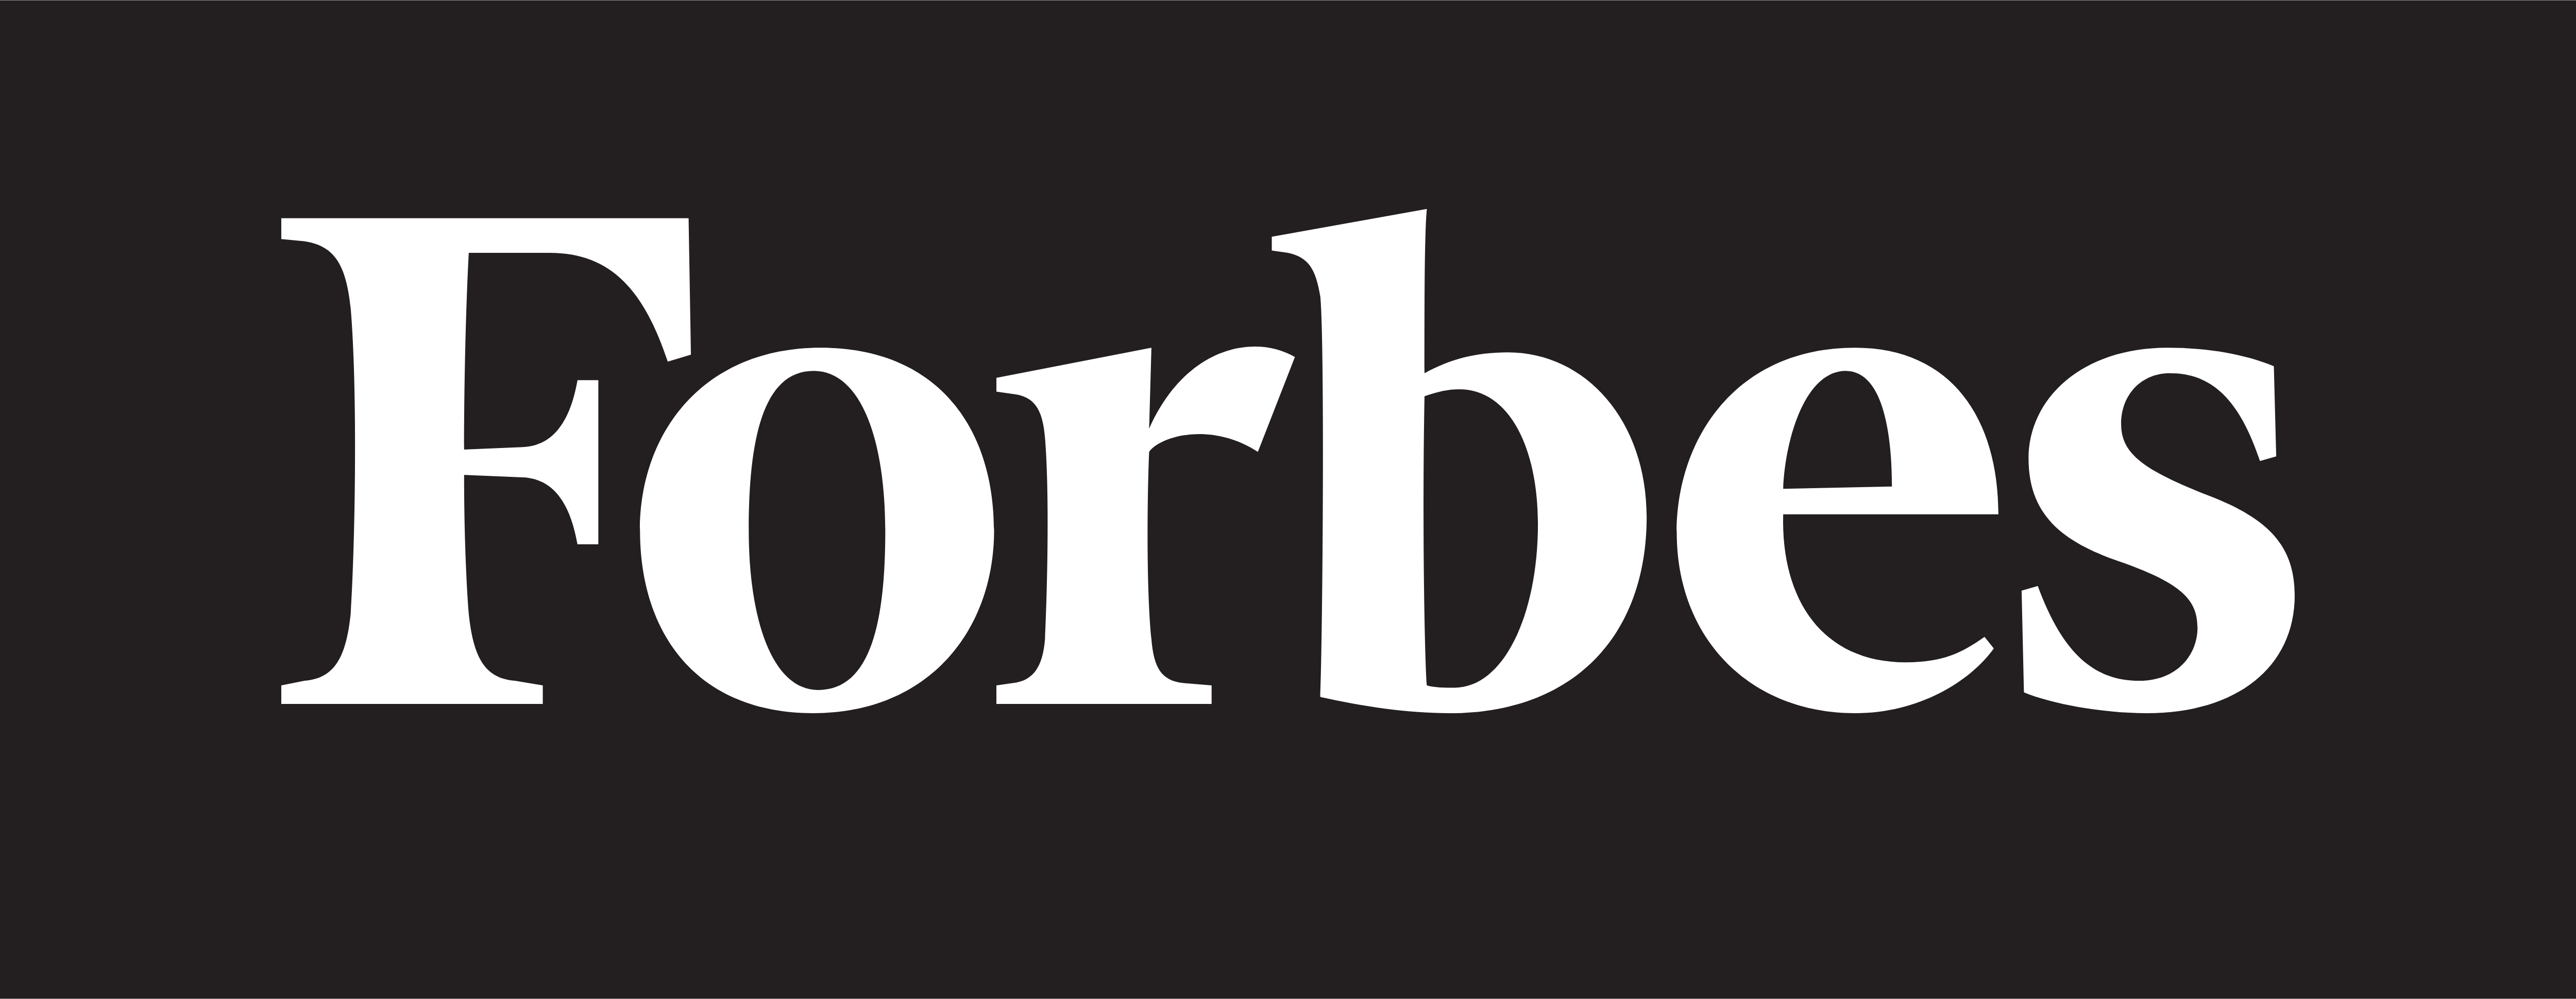 Forbes – Logode allalaadimine